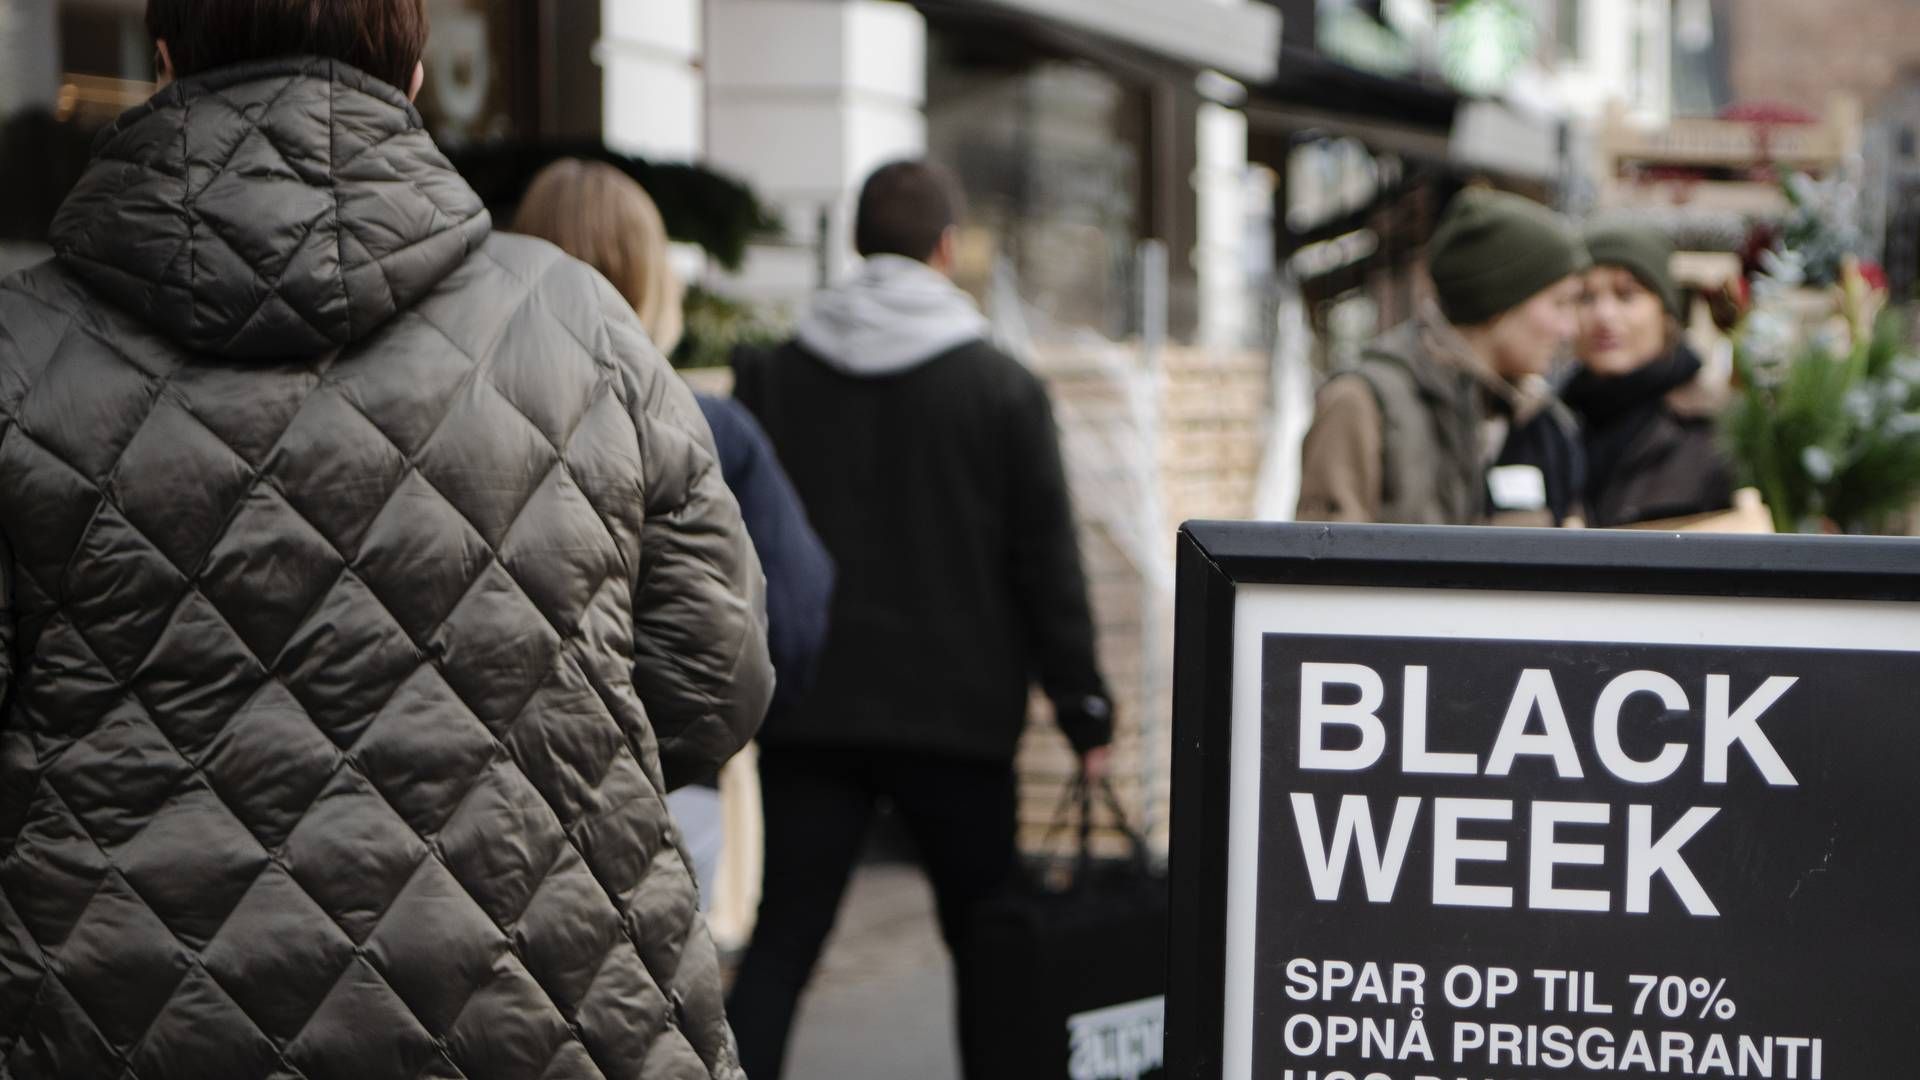 Black friday er på få år blevet den vel nok største enkeltstående handelsdag, og det forsøger kriminelle at udnytte. | Foto: Rikke Kjær Poulsen/JPA